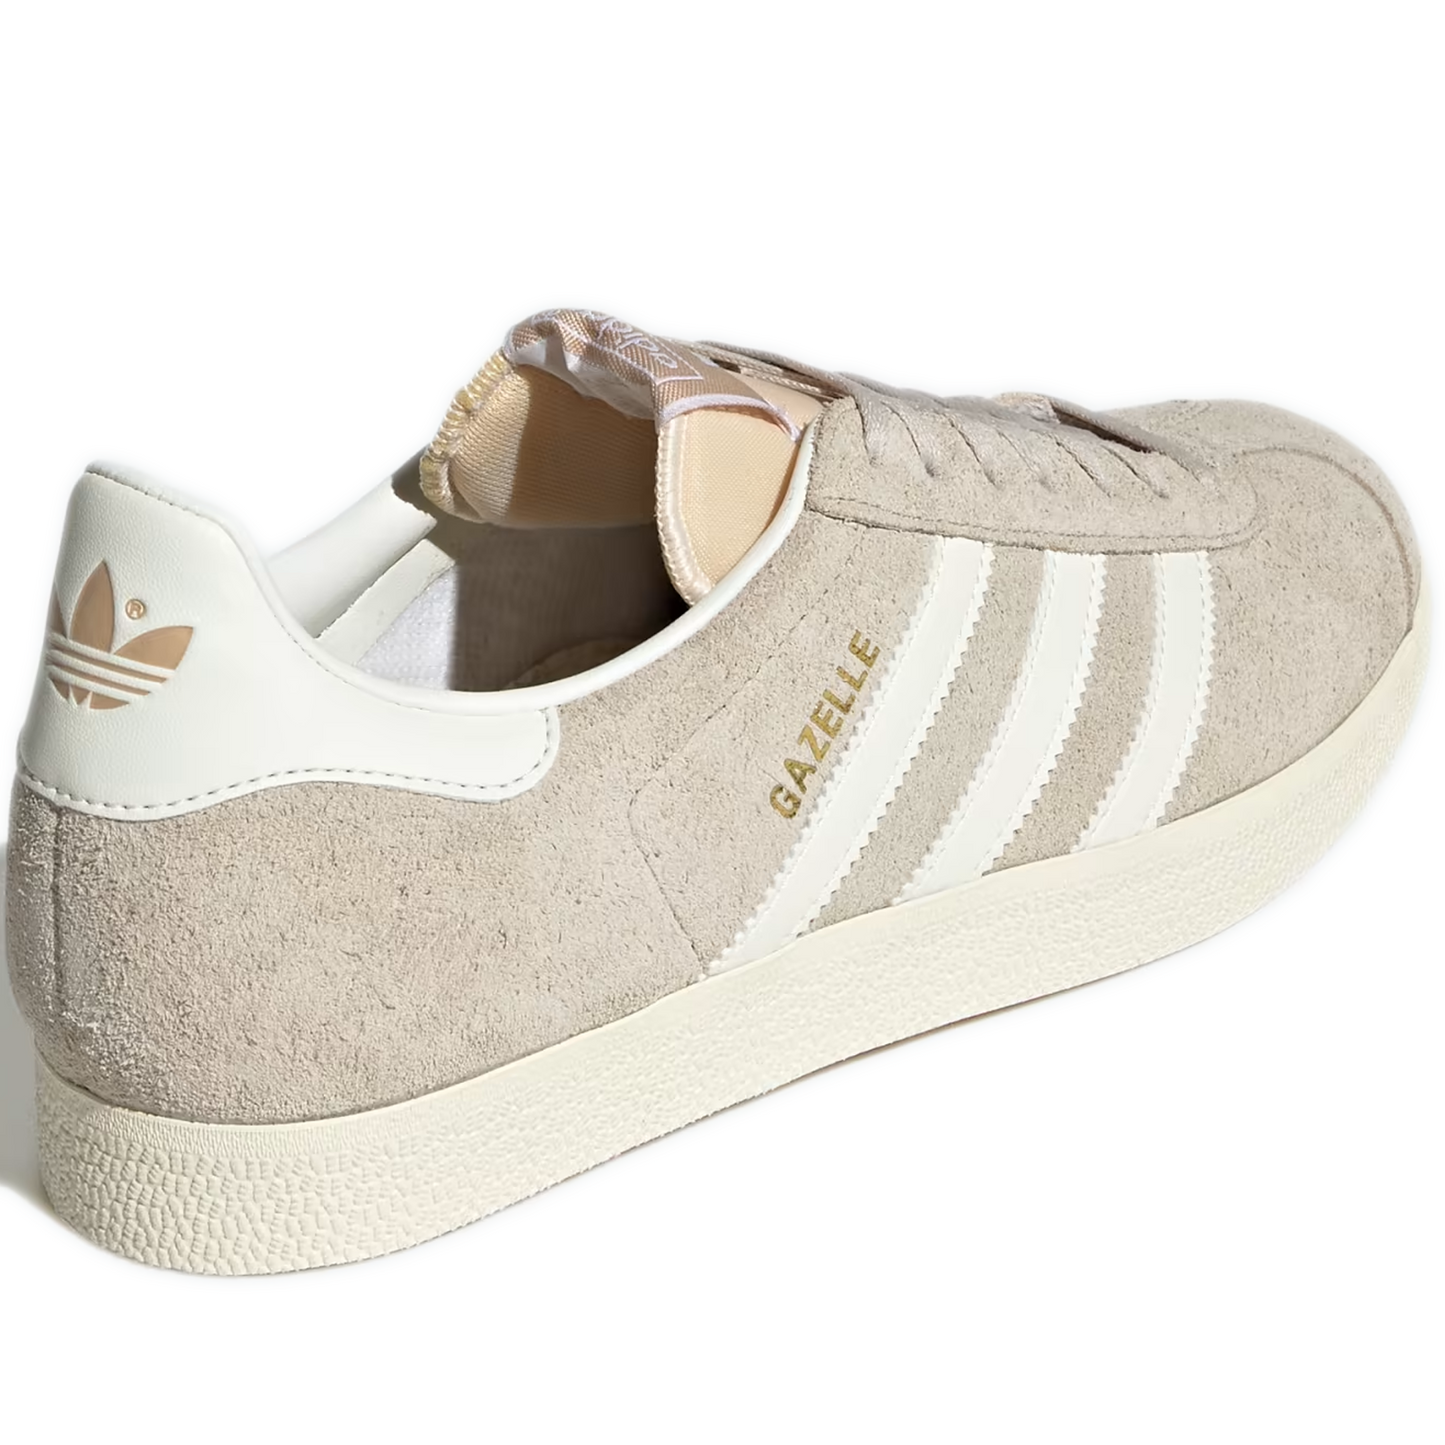 Men's Adidas Gazelle Shoes - Beige/ Off White/ Cream White